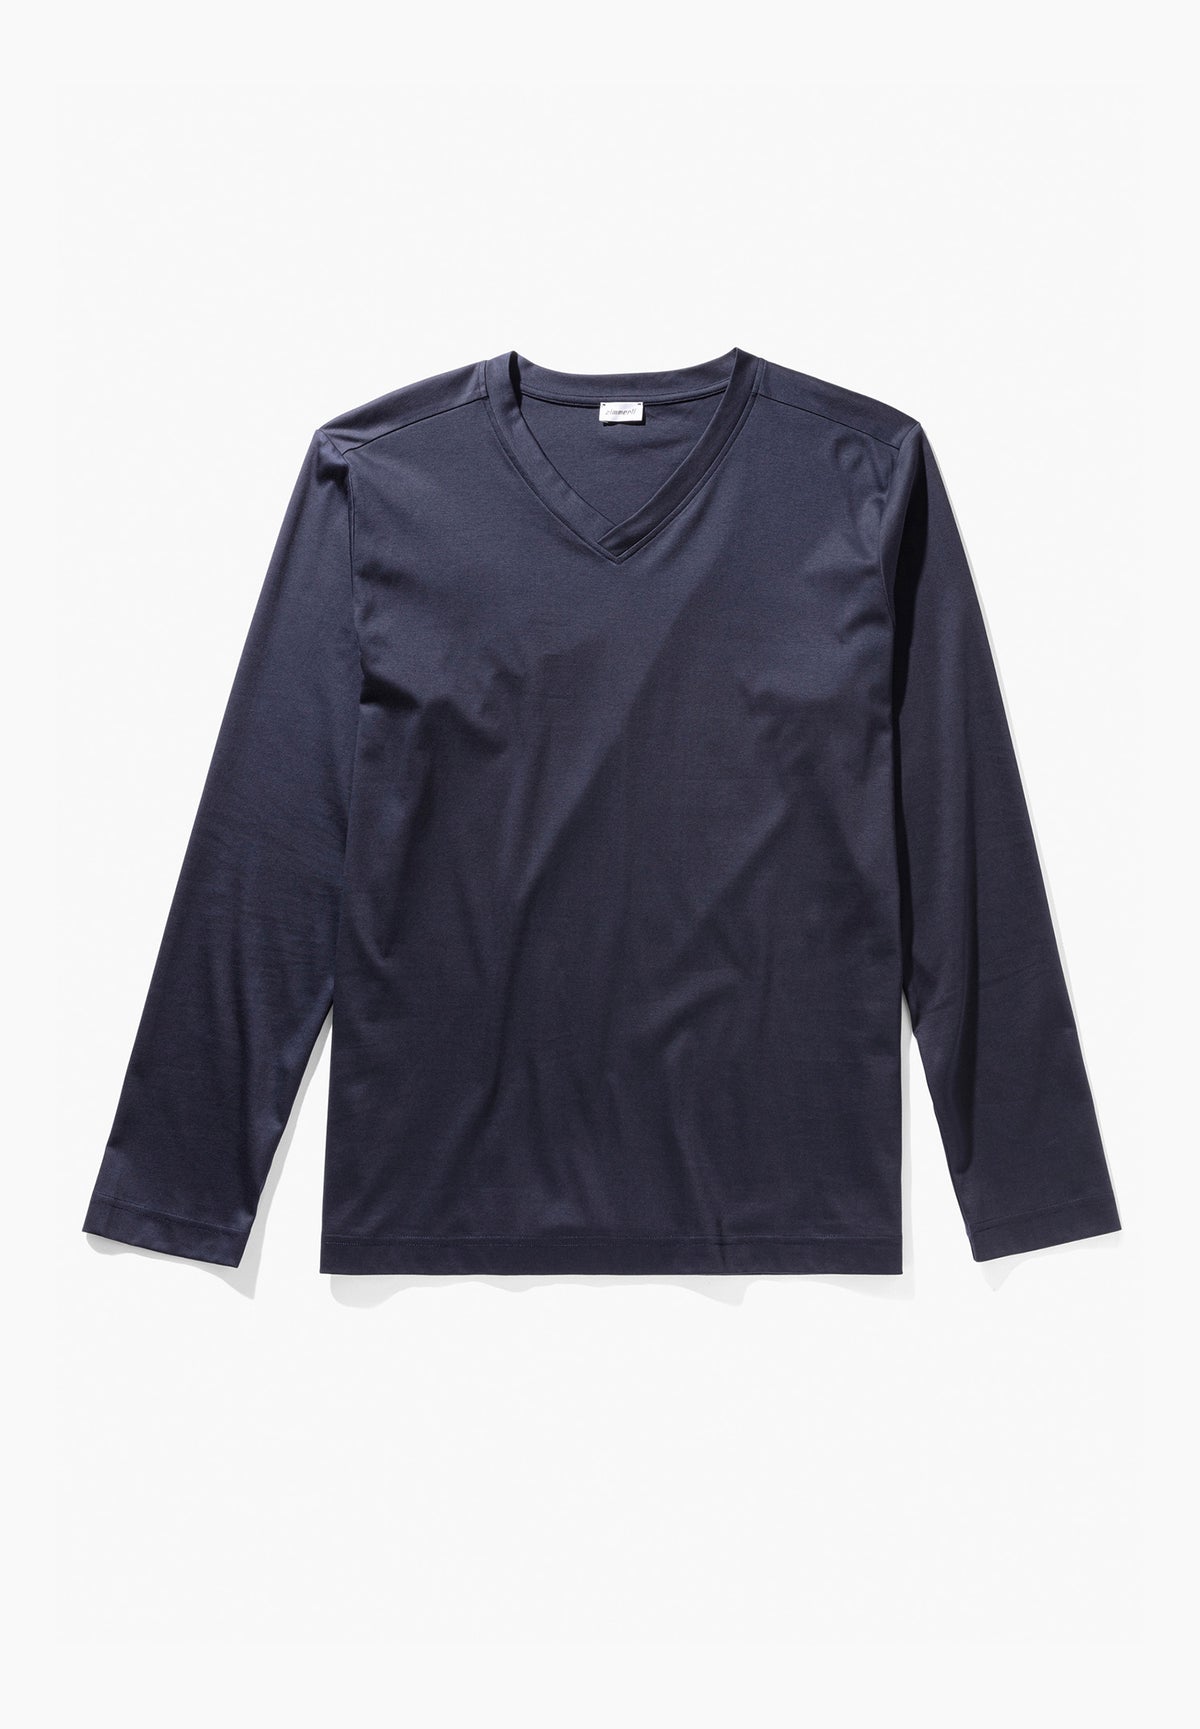 Grey Long Sleeve Supreme Shirt Men's Small – CA.DI.ME.